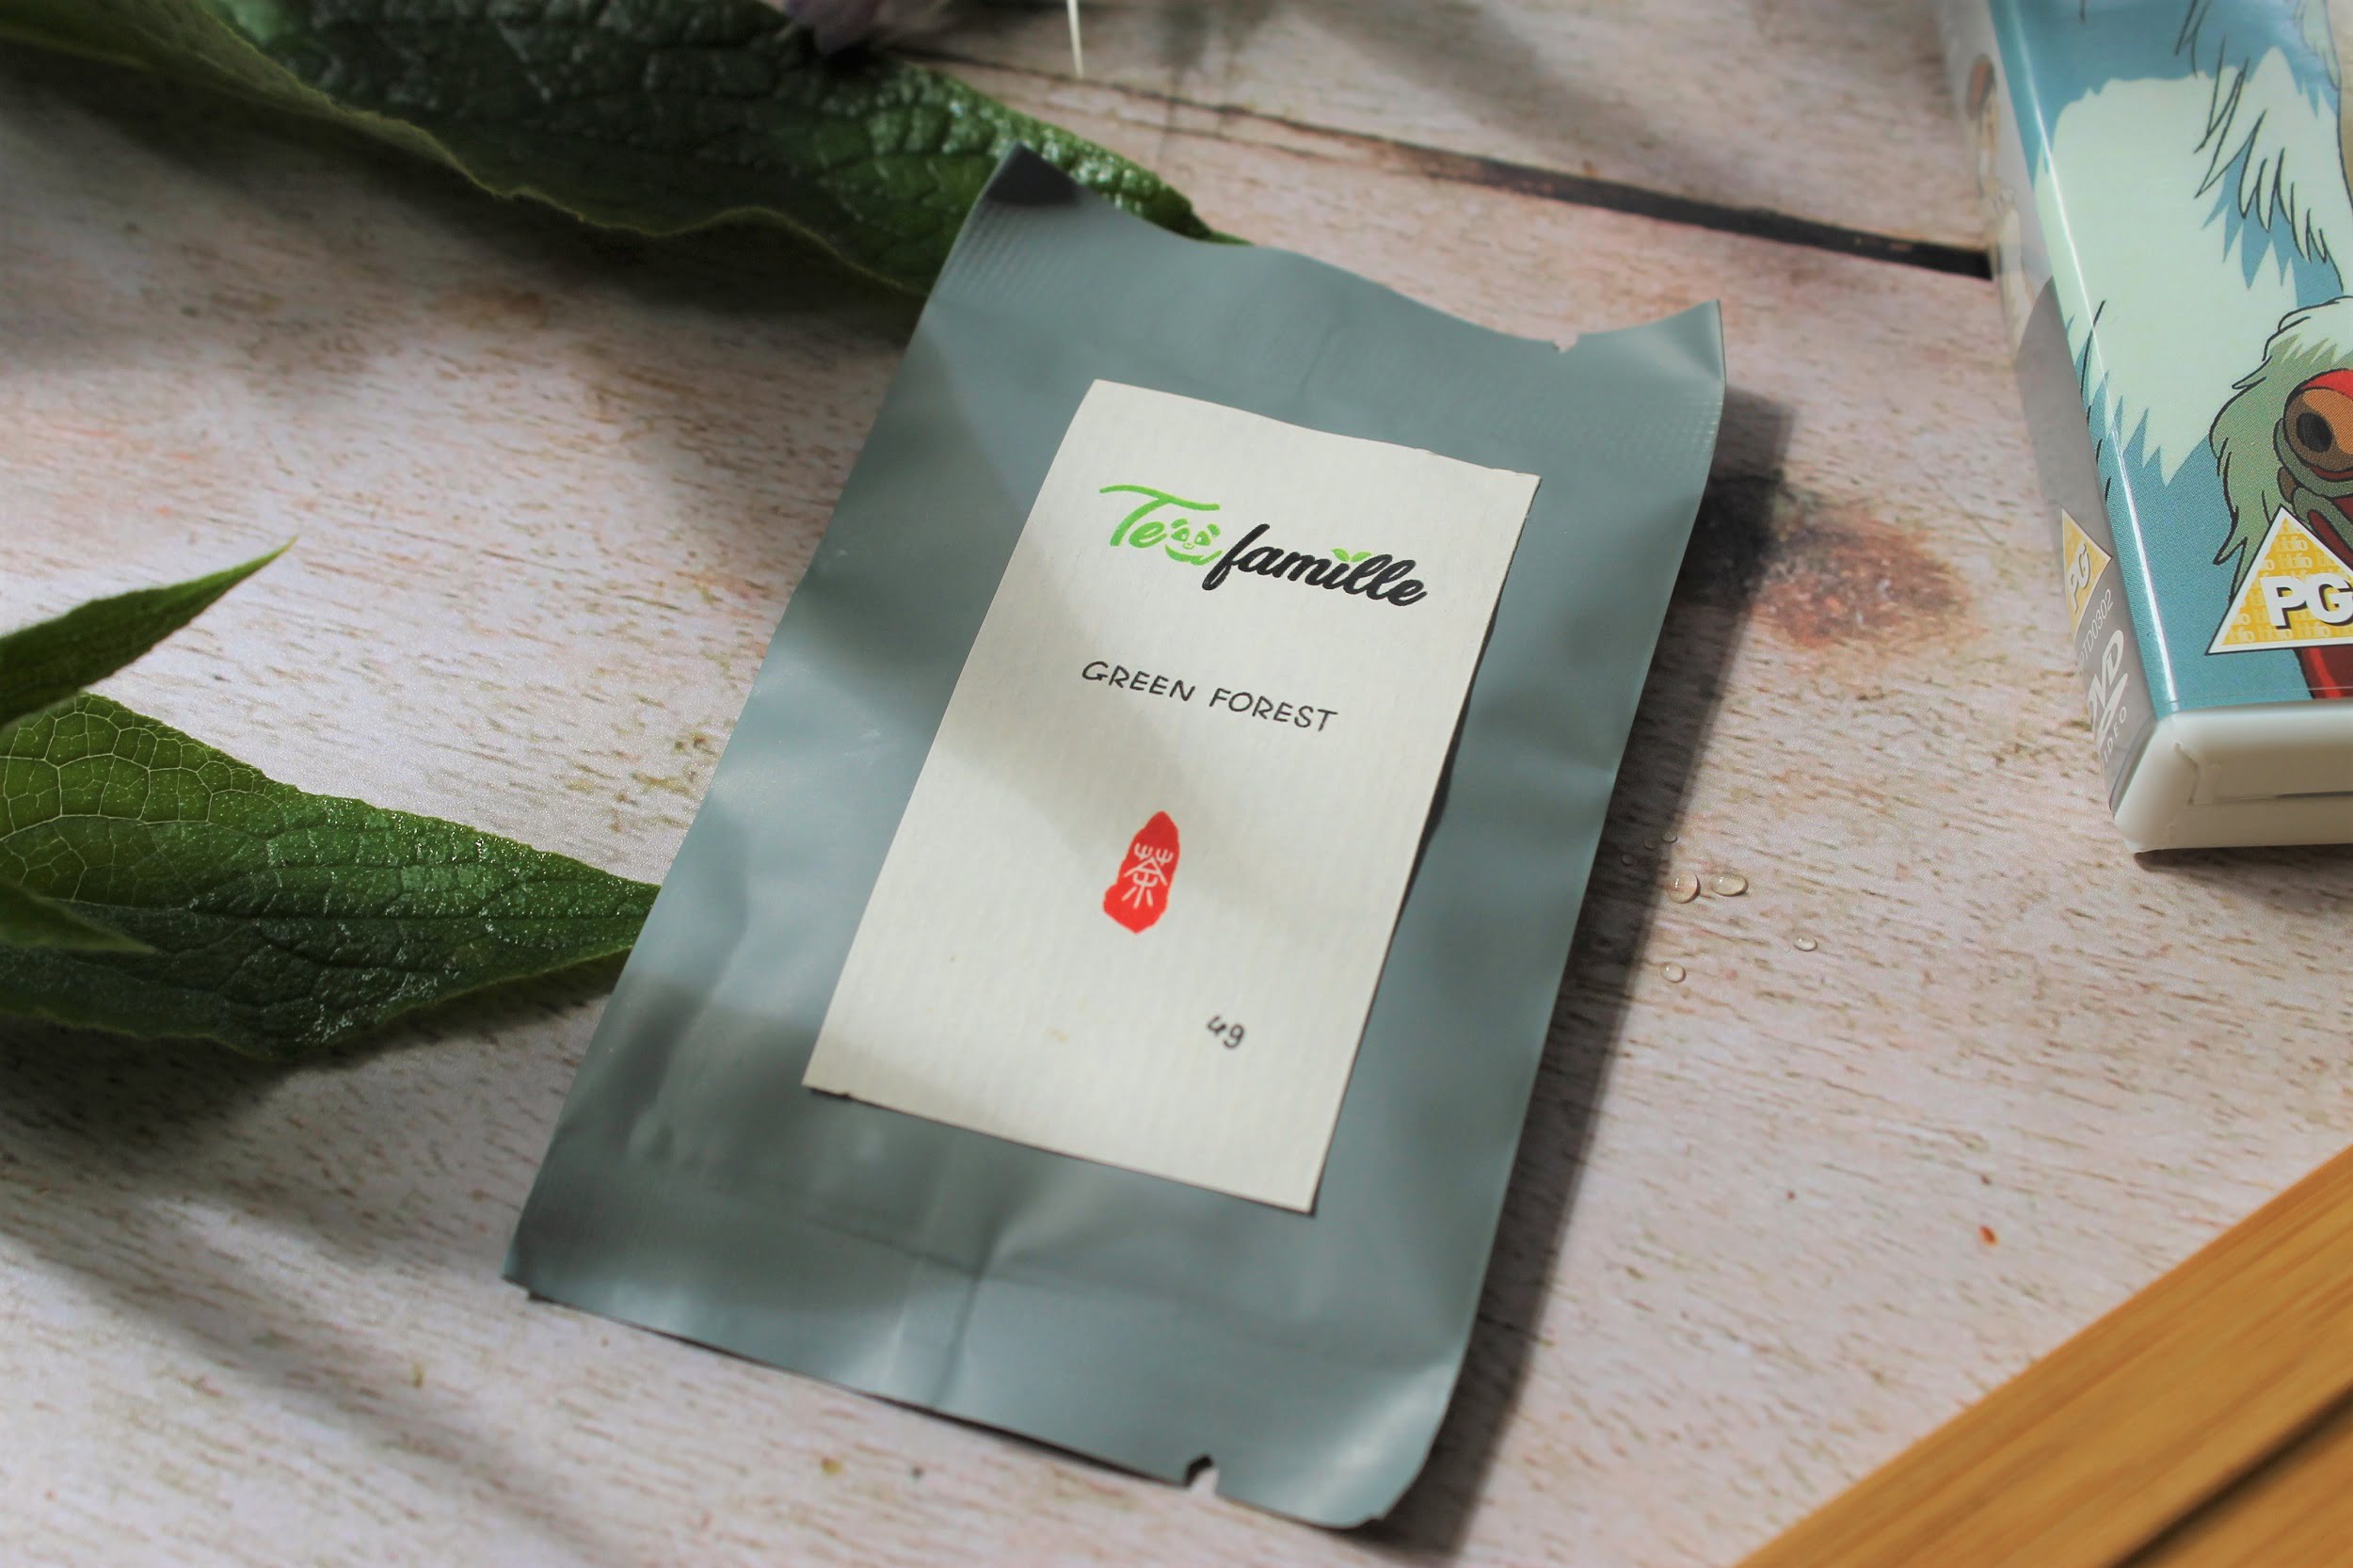 tea famille green forest loose leaf tea package